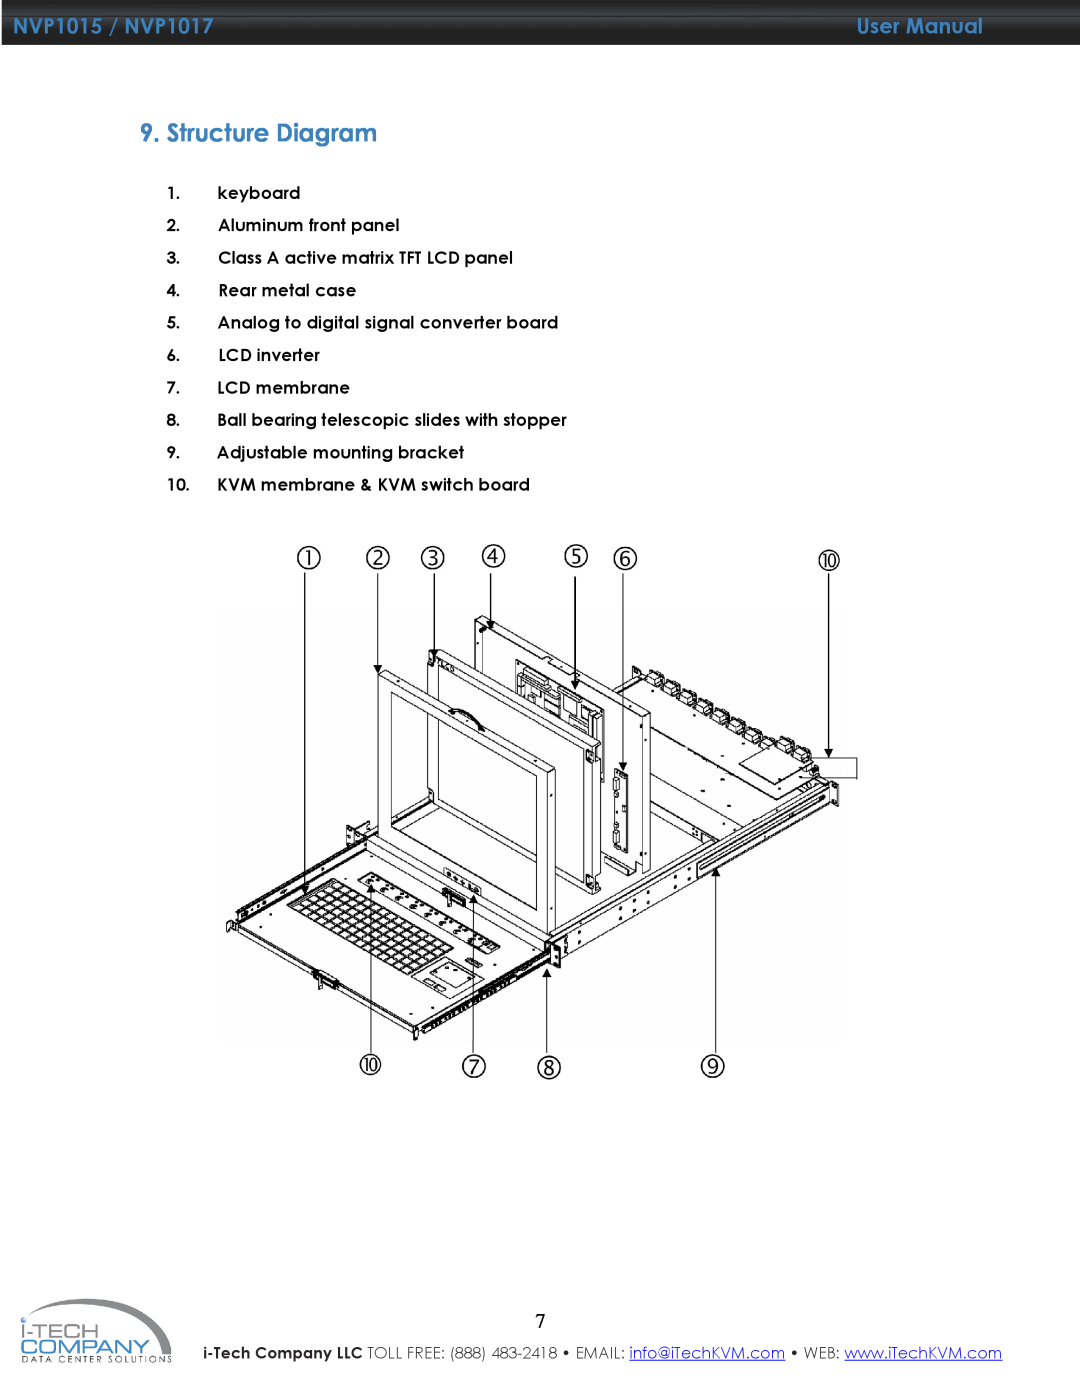 I-Tech Company manual Structure Diagram, NVP1015 / NVP1017, User Manual, keyboard 2. Aluminum front panel 